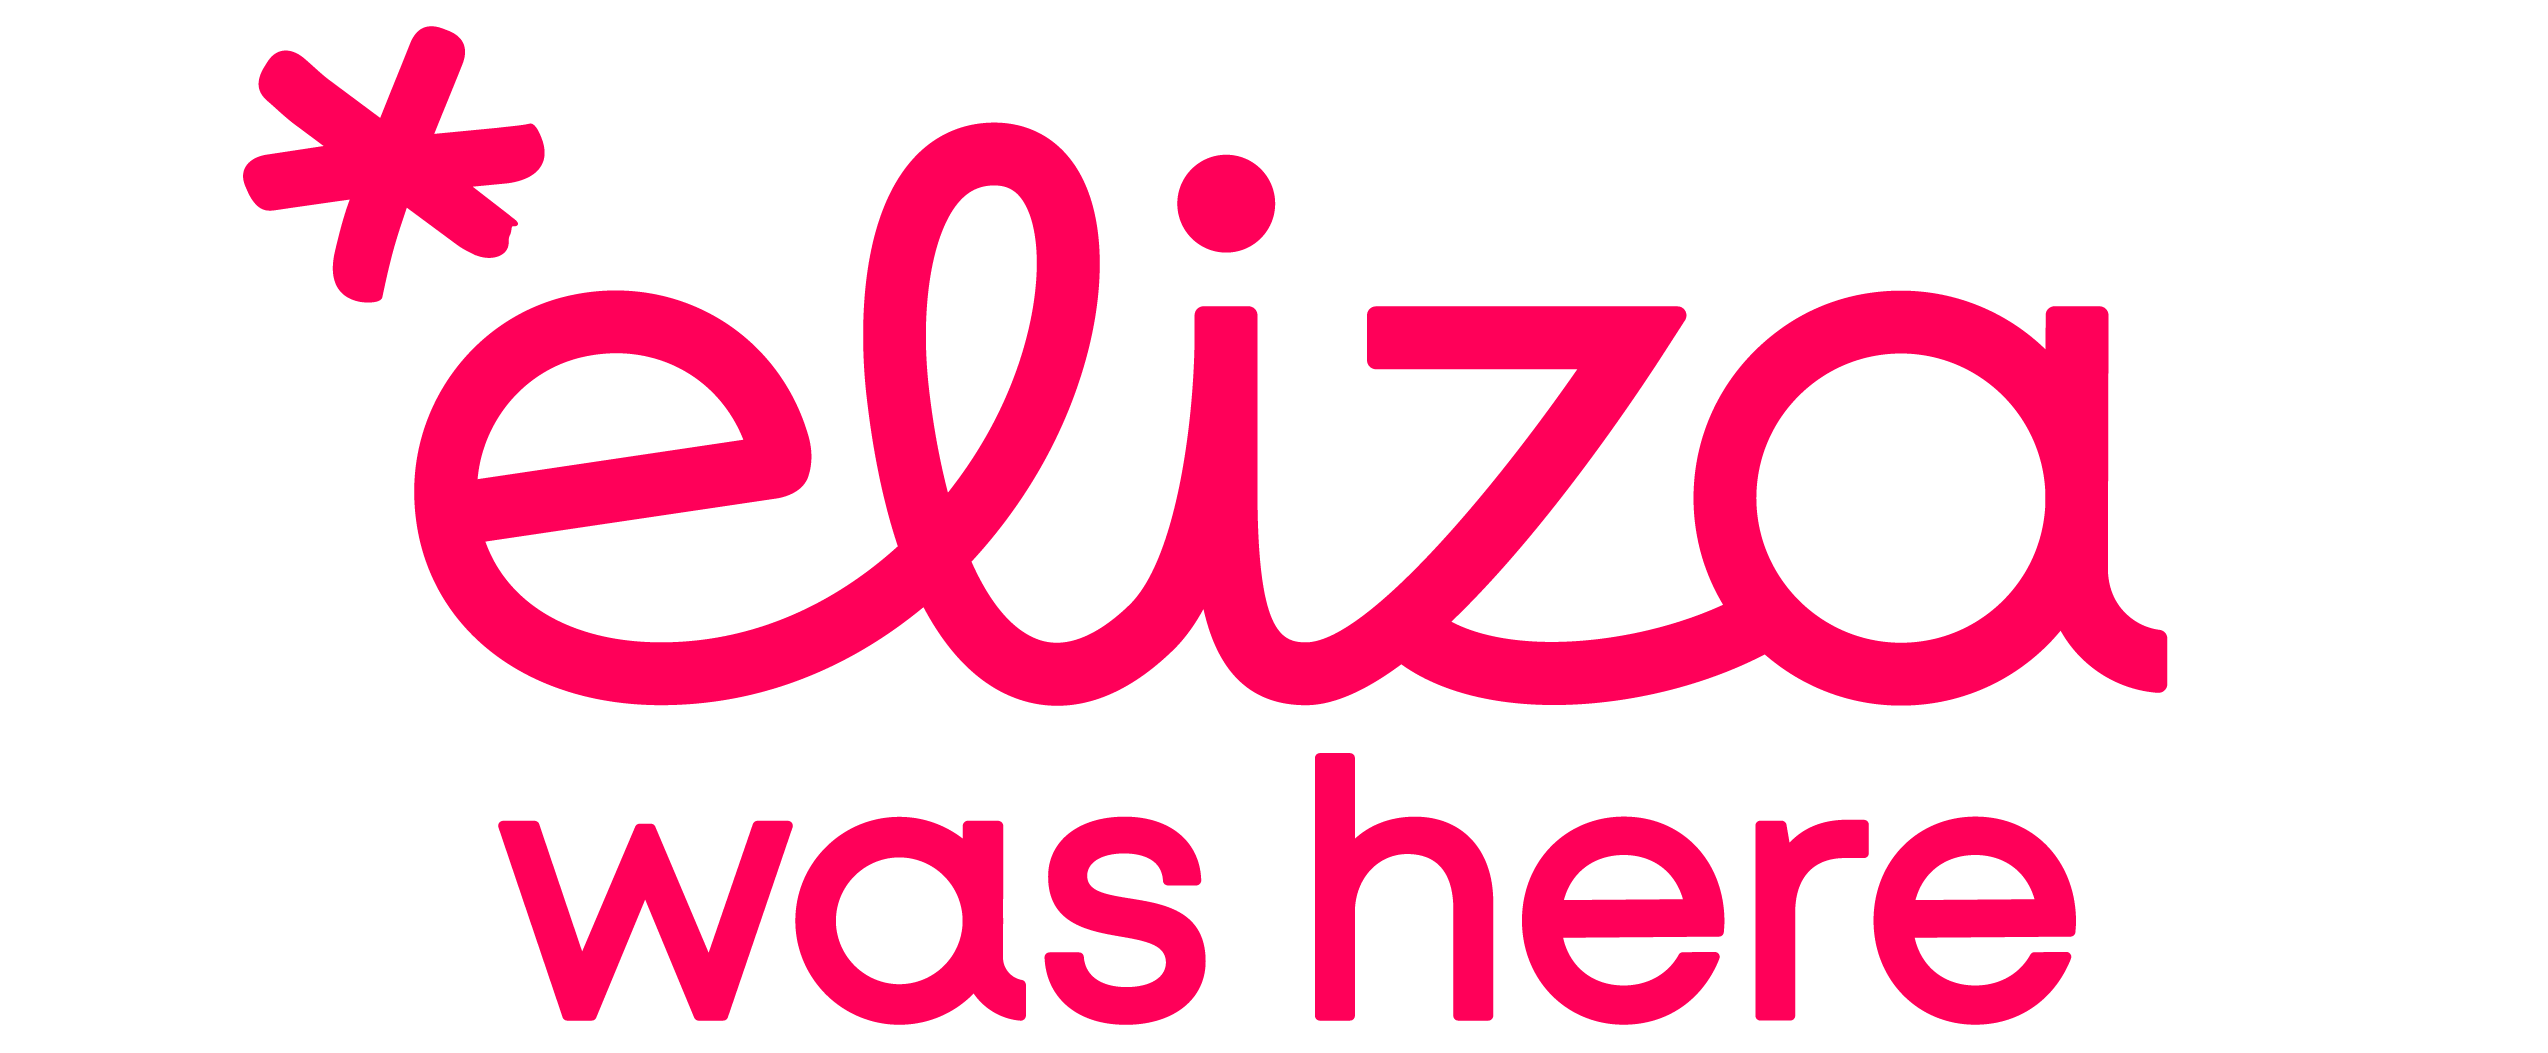 ElizaWasHere logo